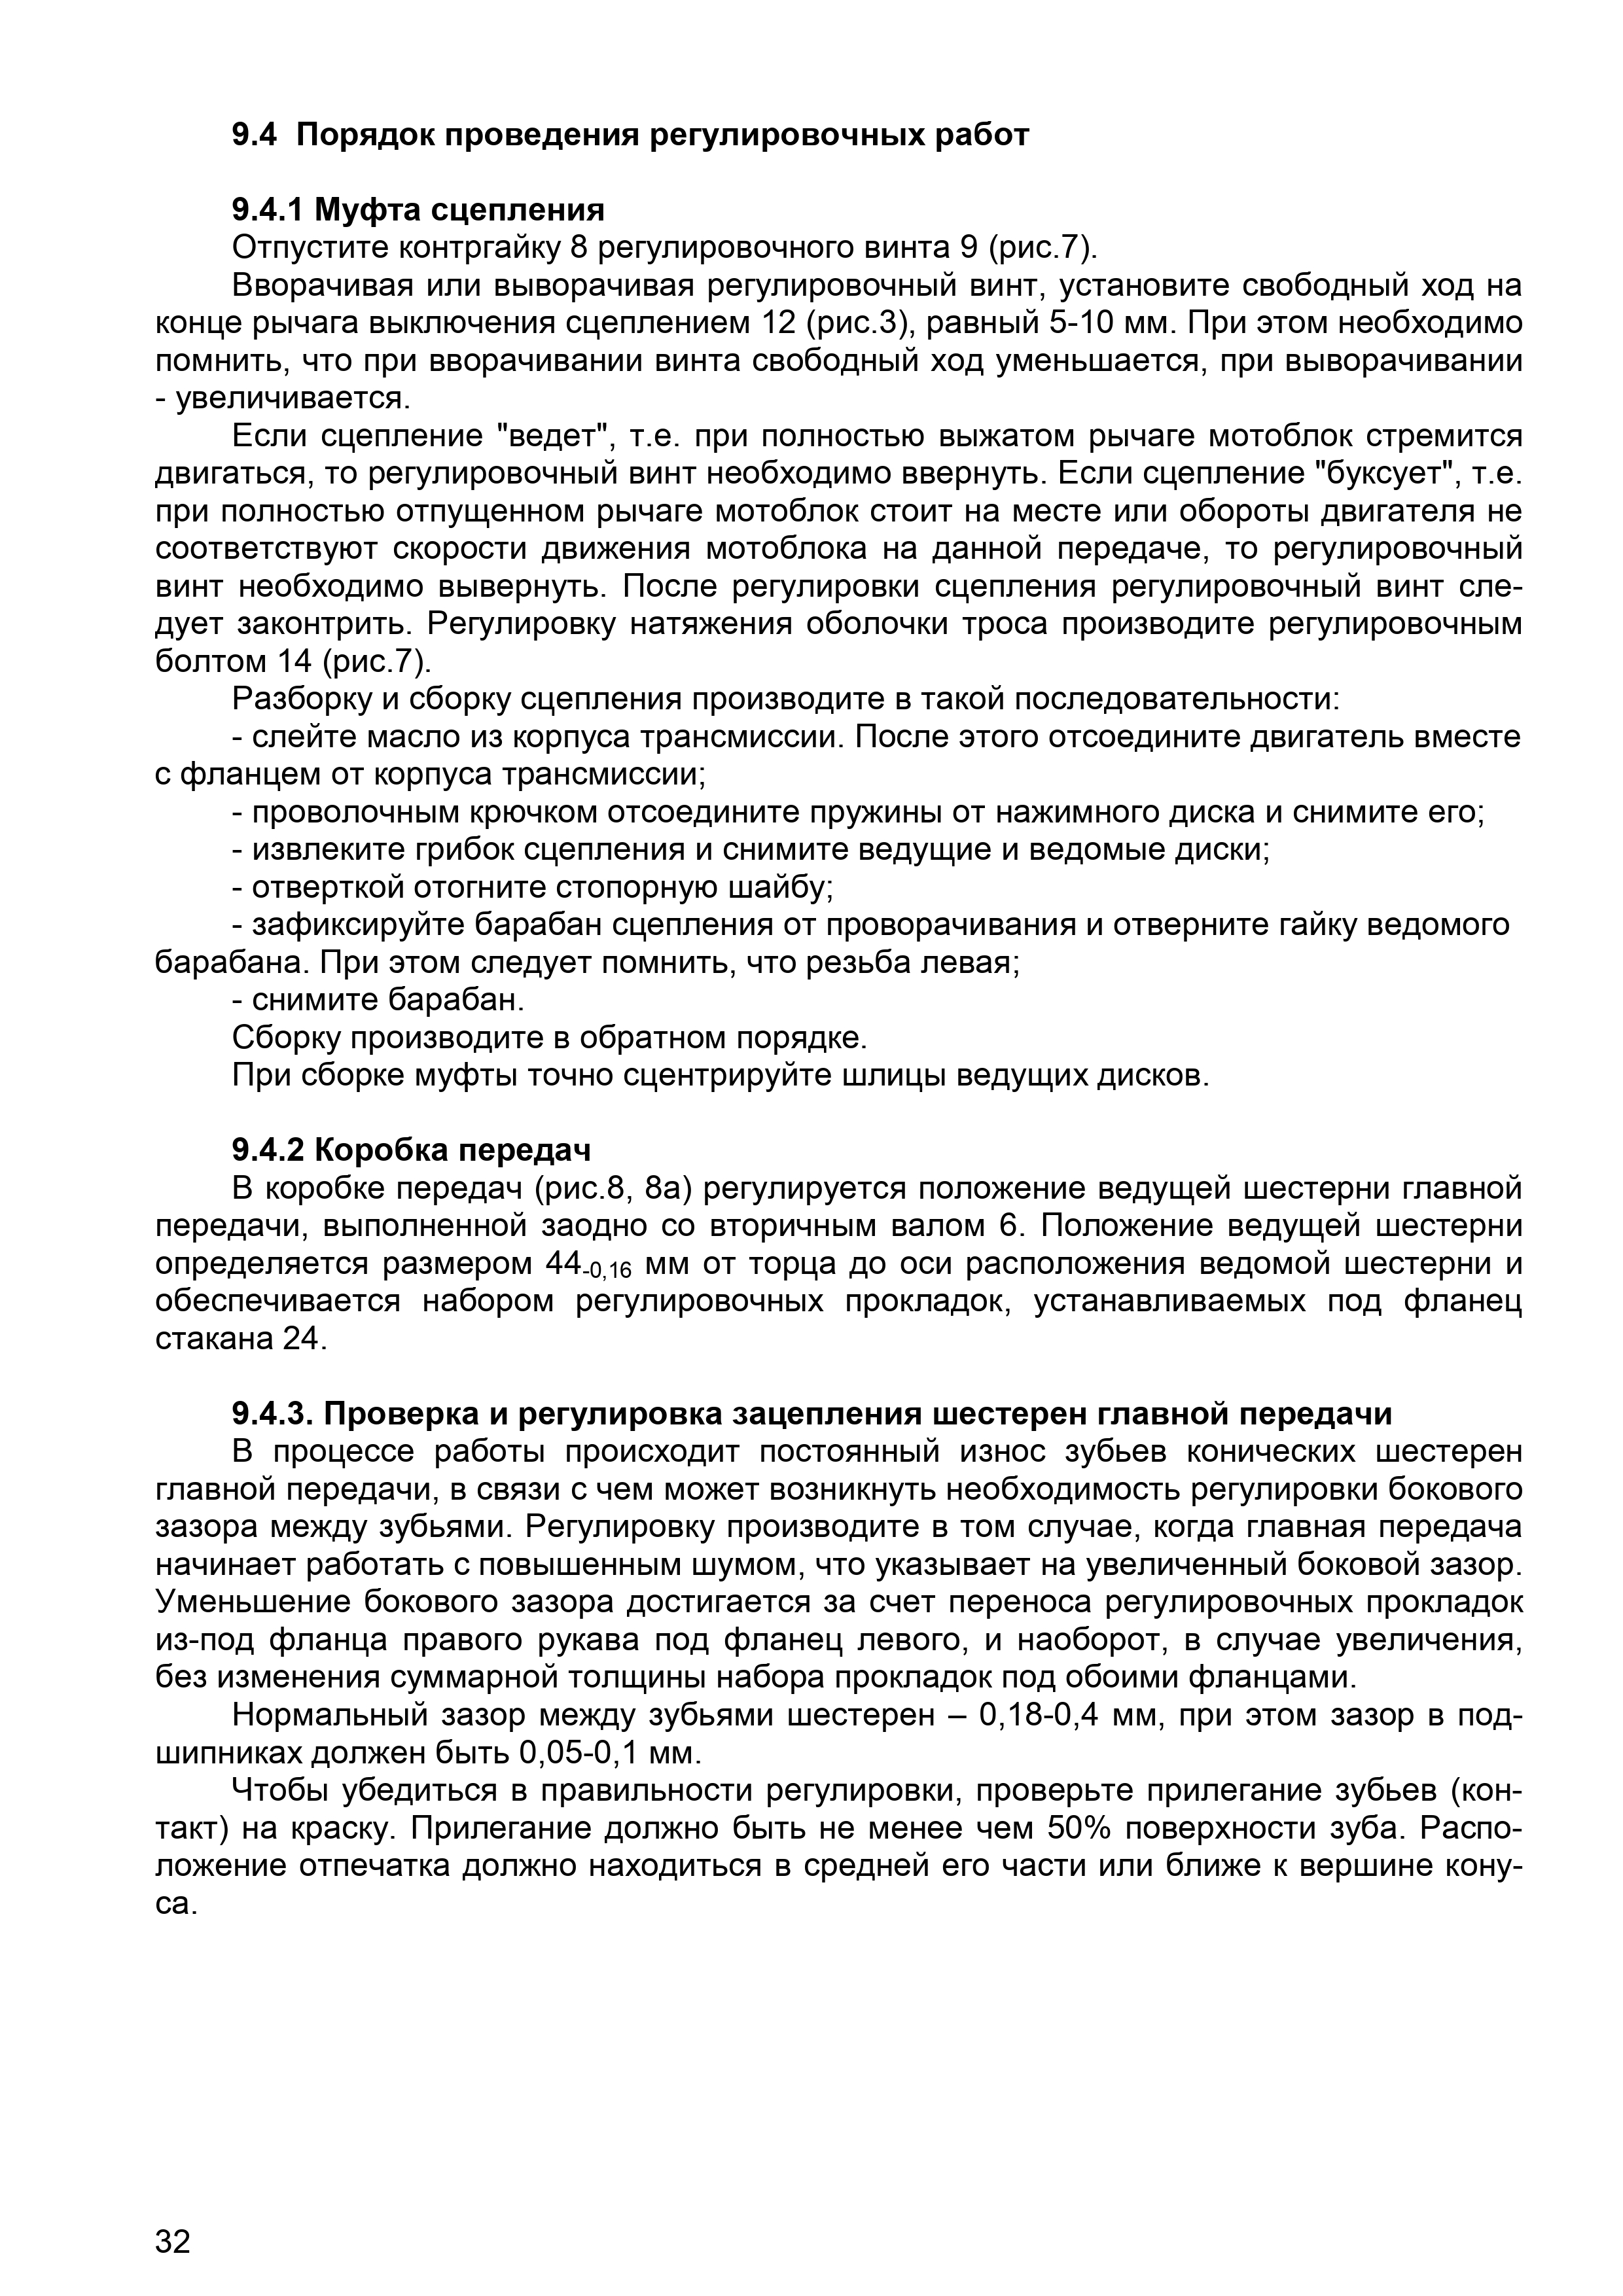 belarus_09h_manual i catalog (1)_page-0032